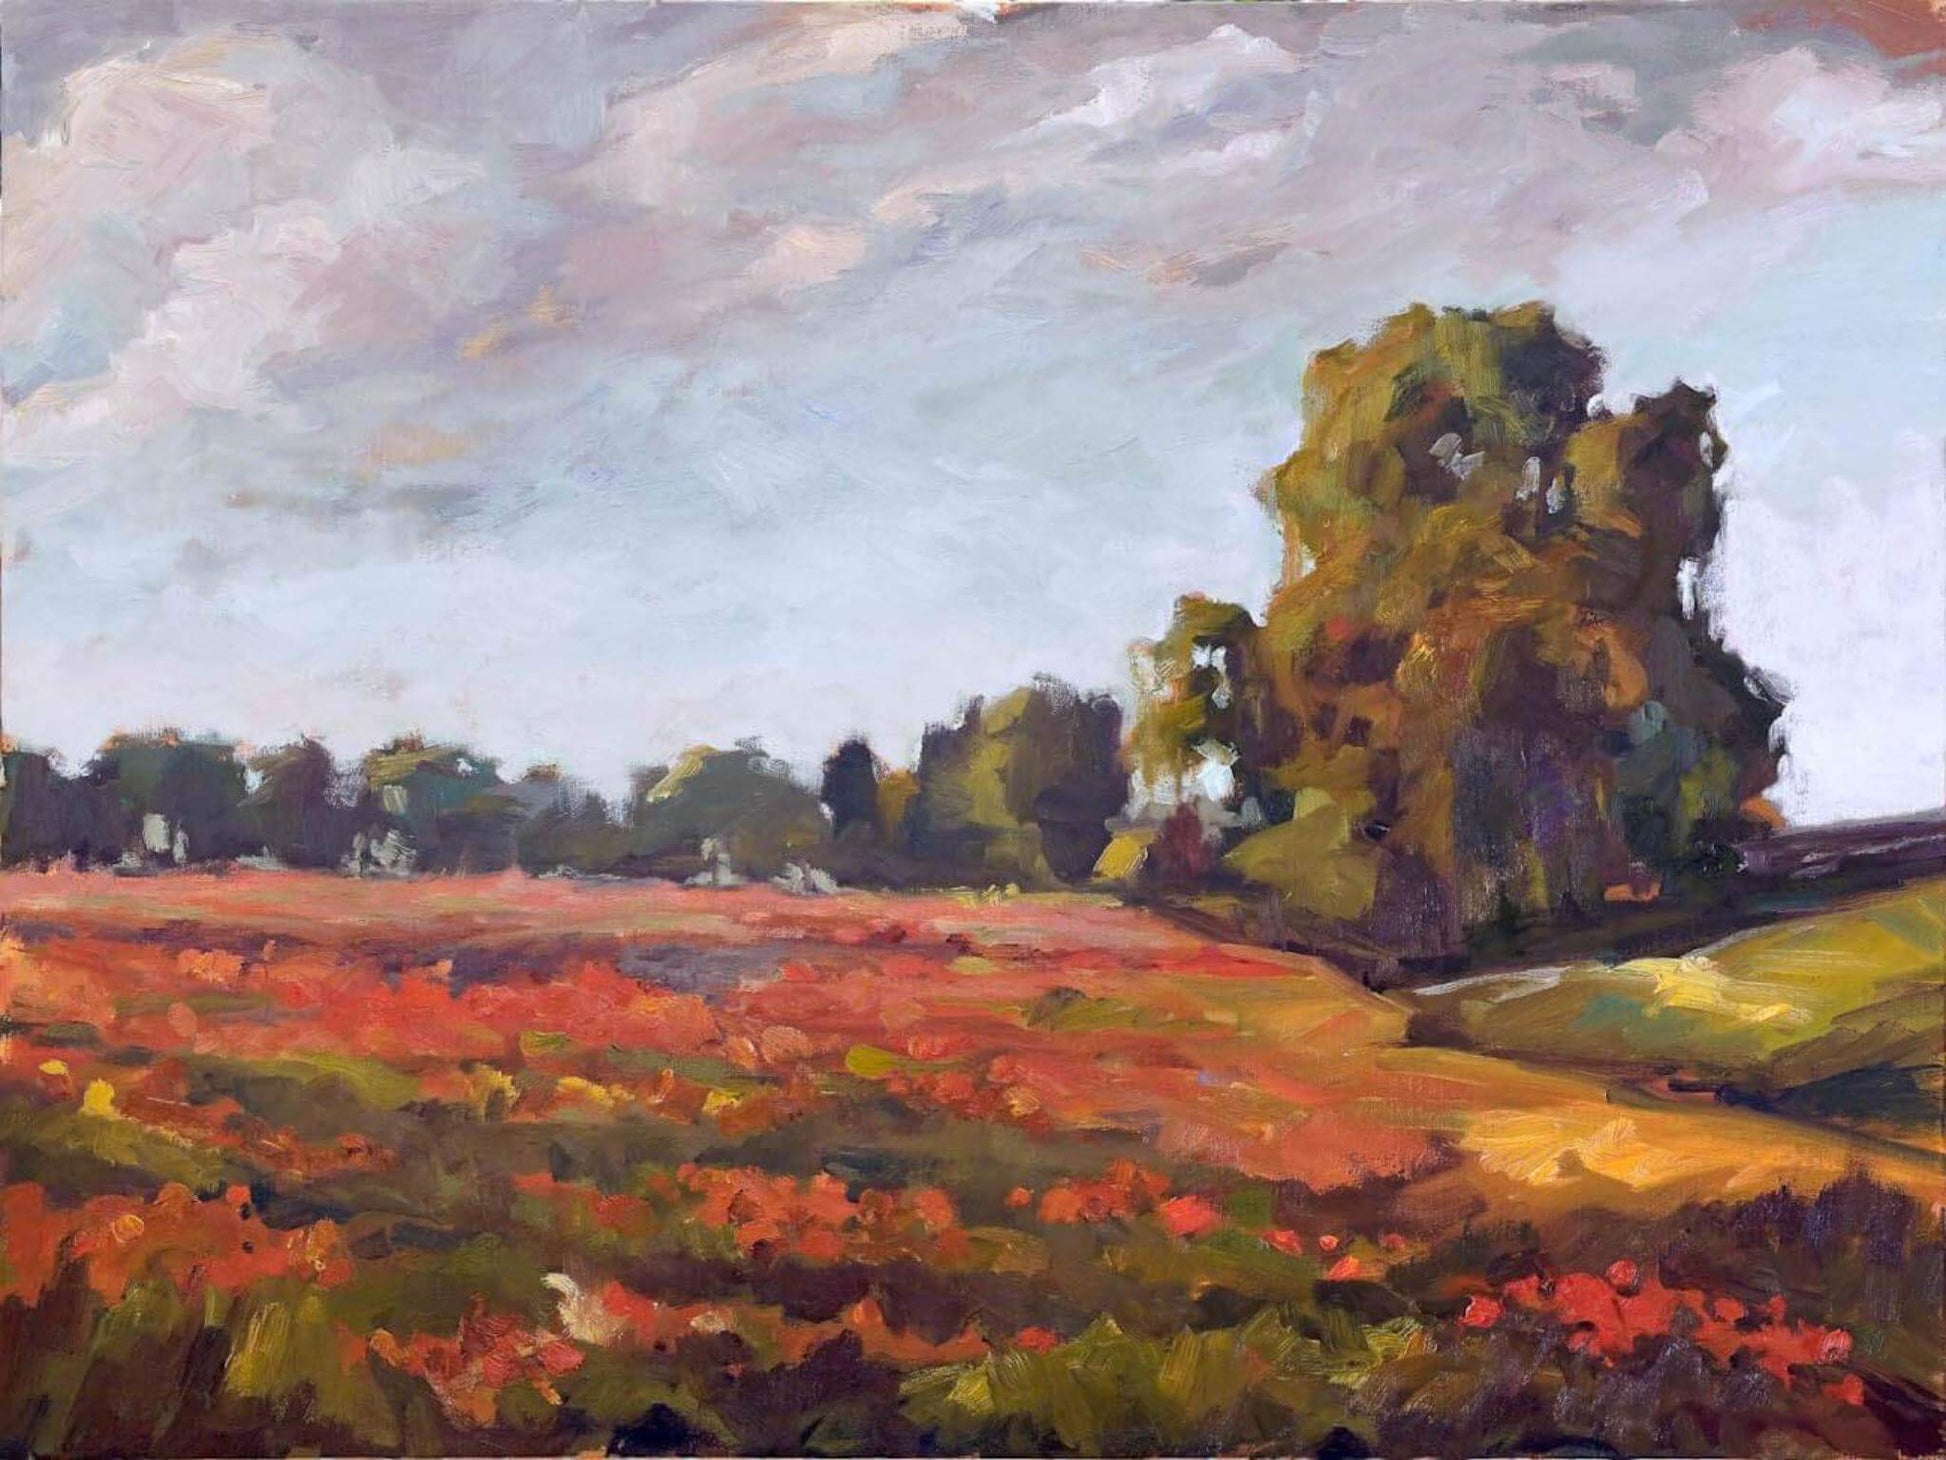 Landscape Art Sea of Poppies John Beard Collection